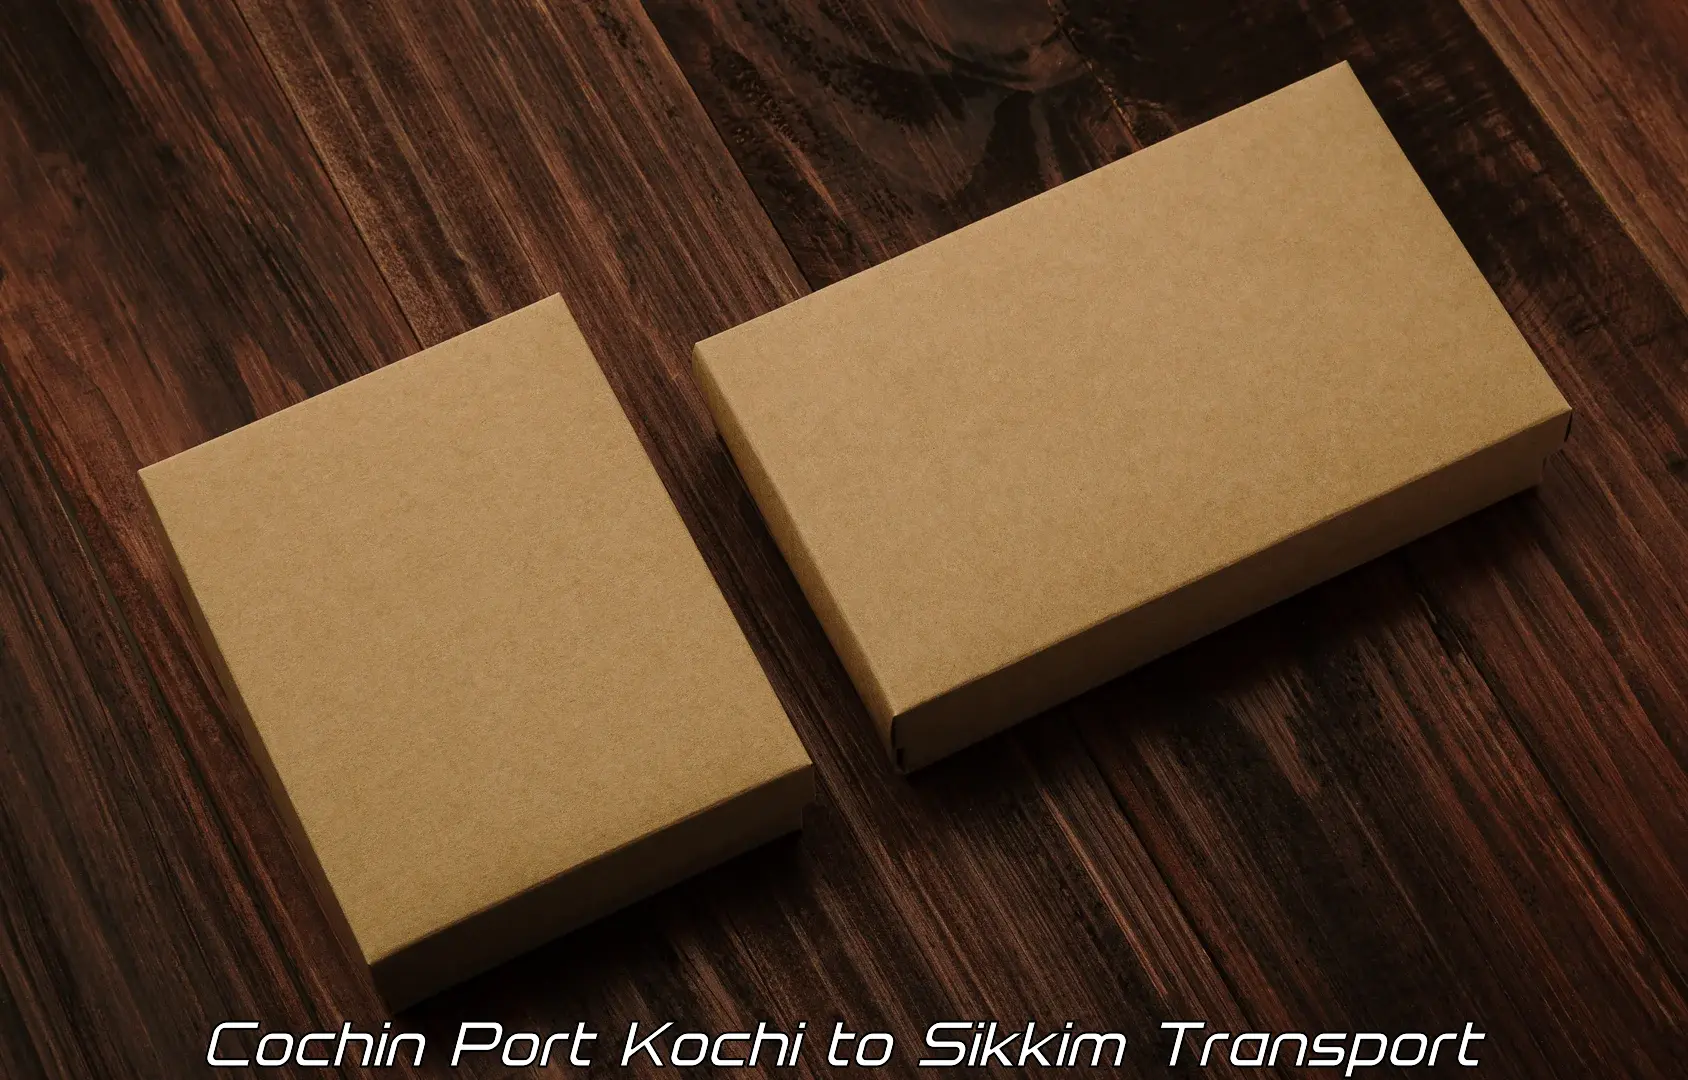 All India transport service Cochin Port Kochi to North Sikkim